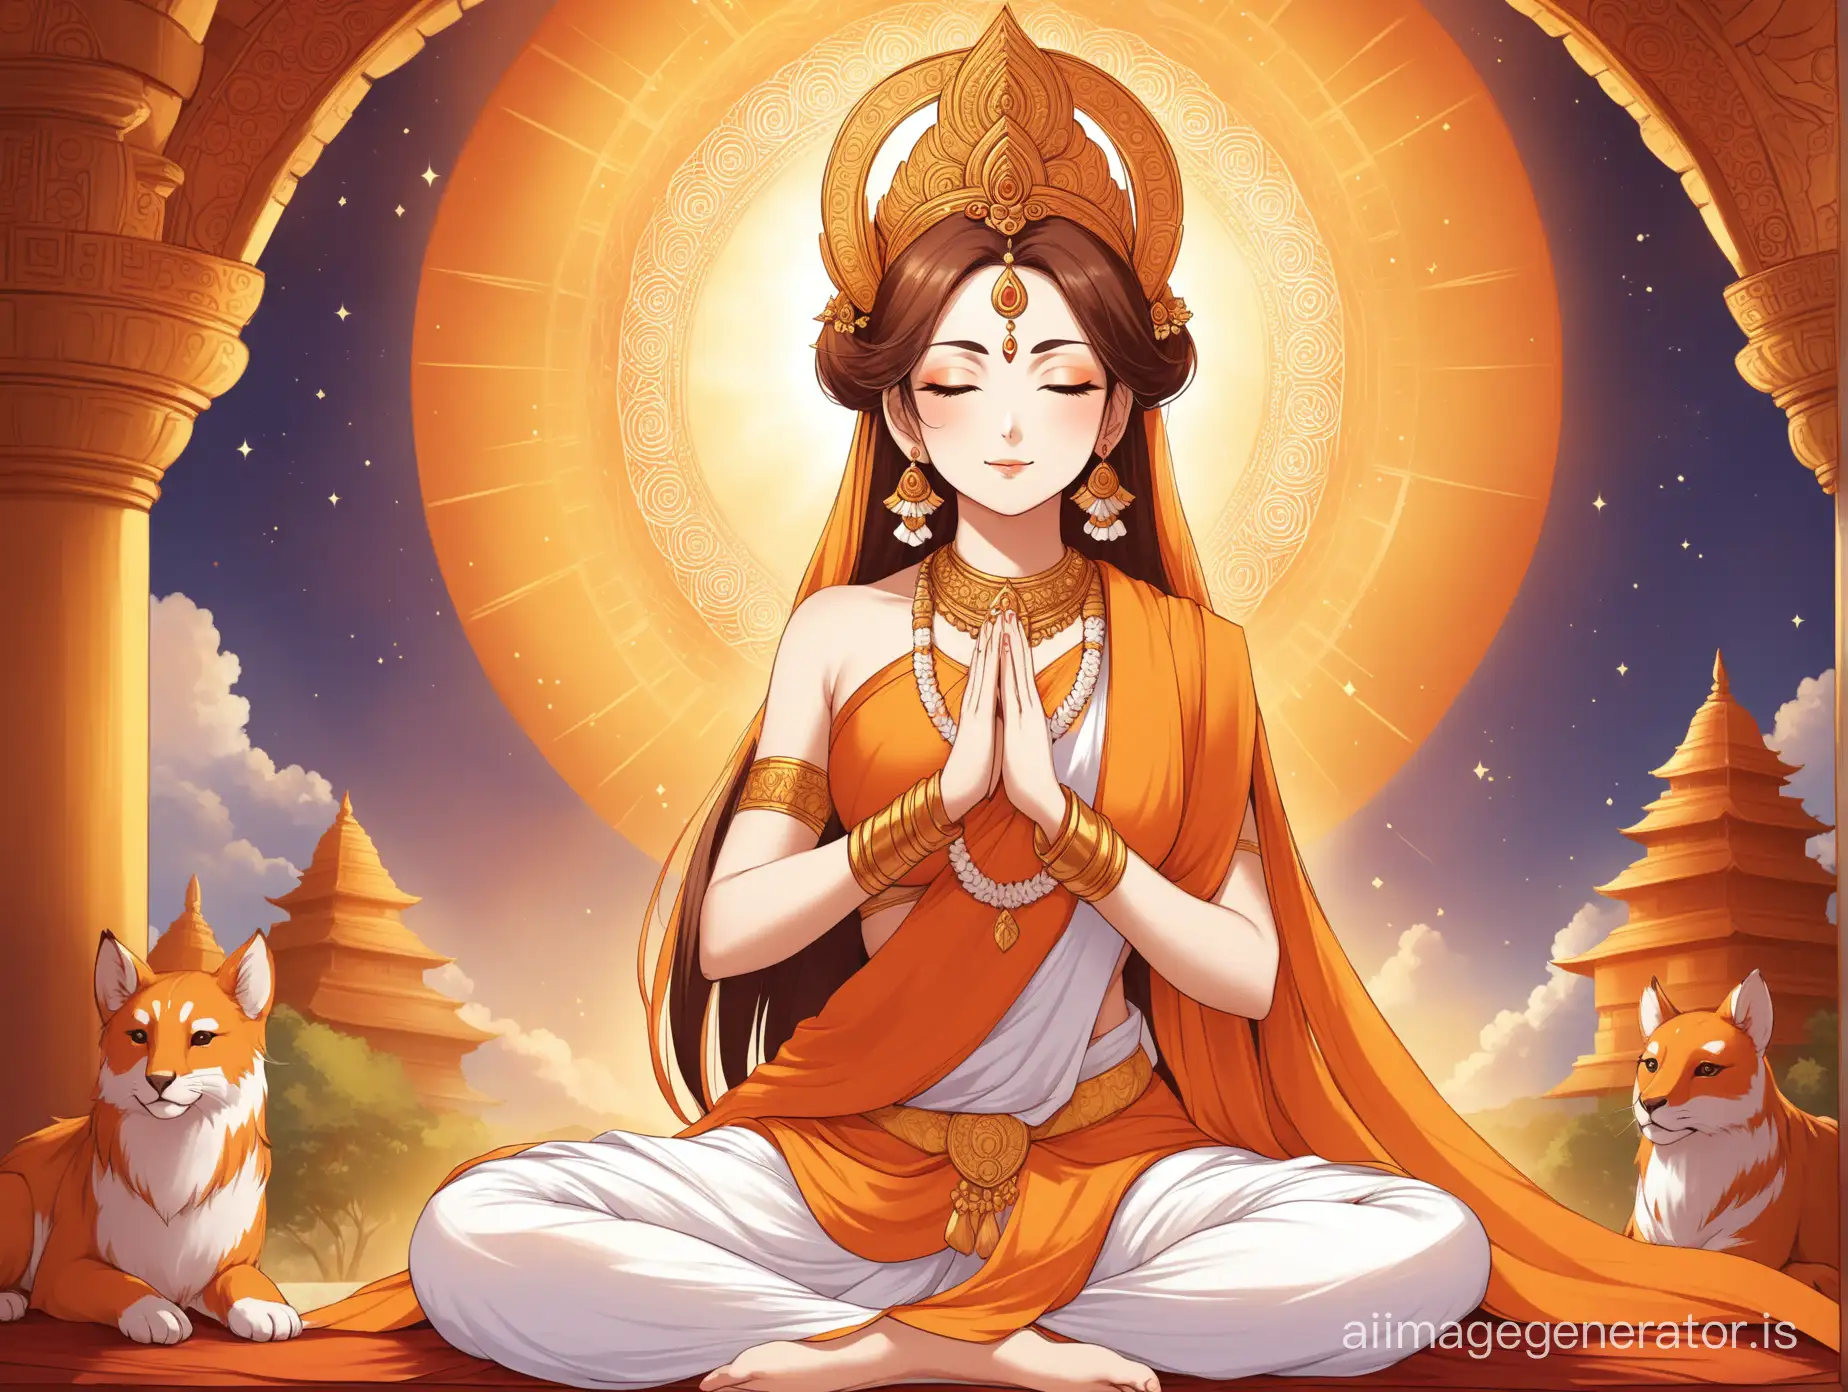 Goddess-Sita-in-Meditation-Embodiment-of-Serenity-and-Spiritual-Wisdom